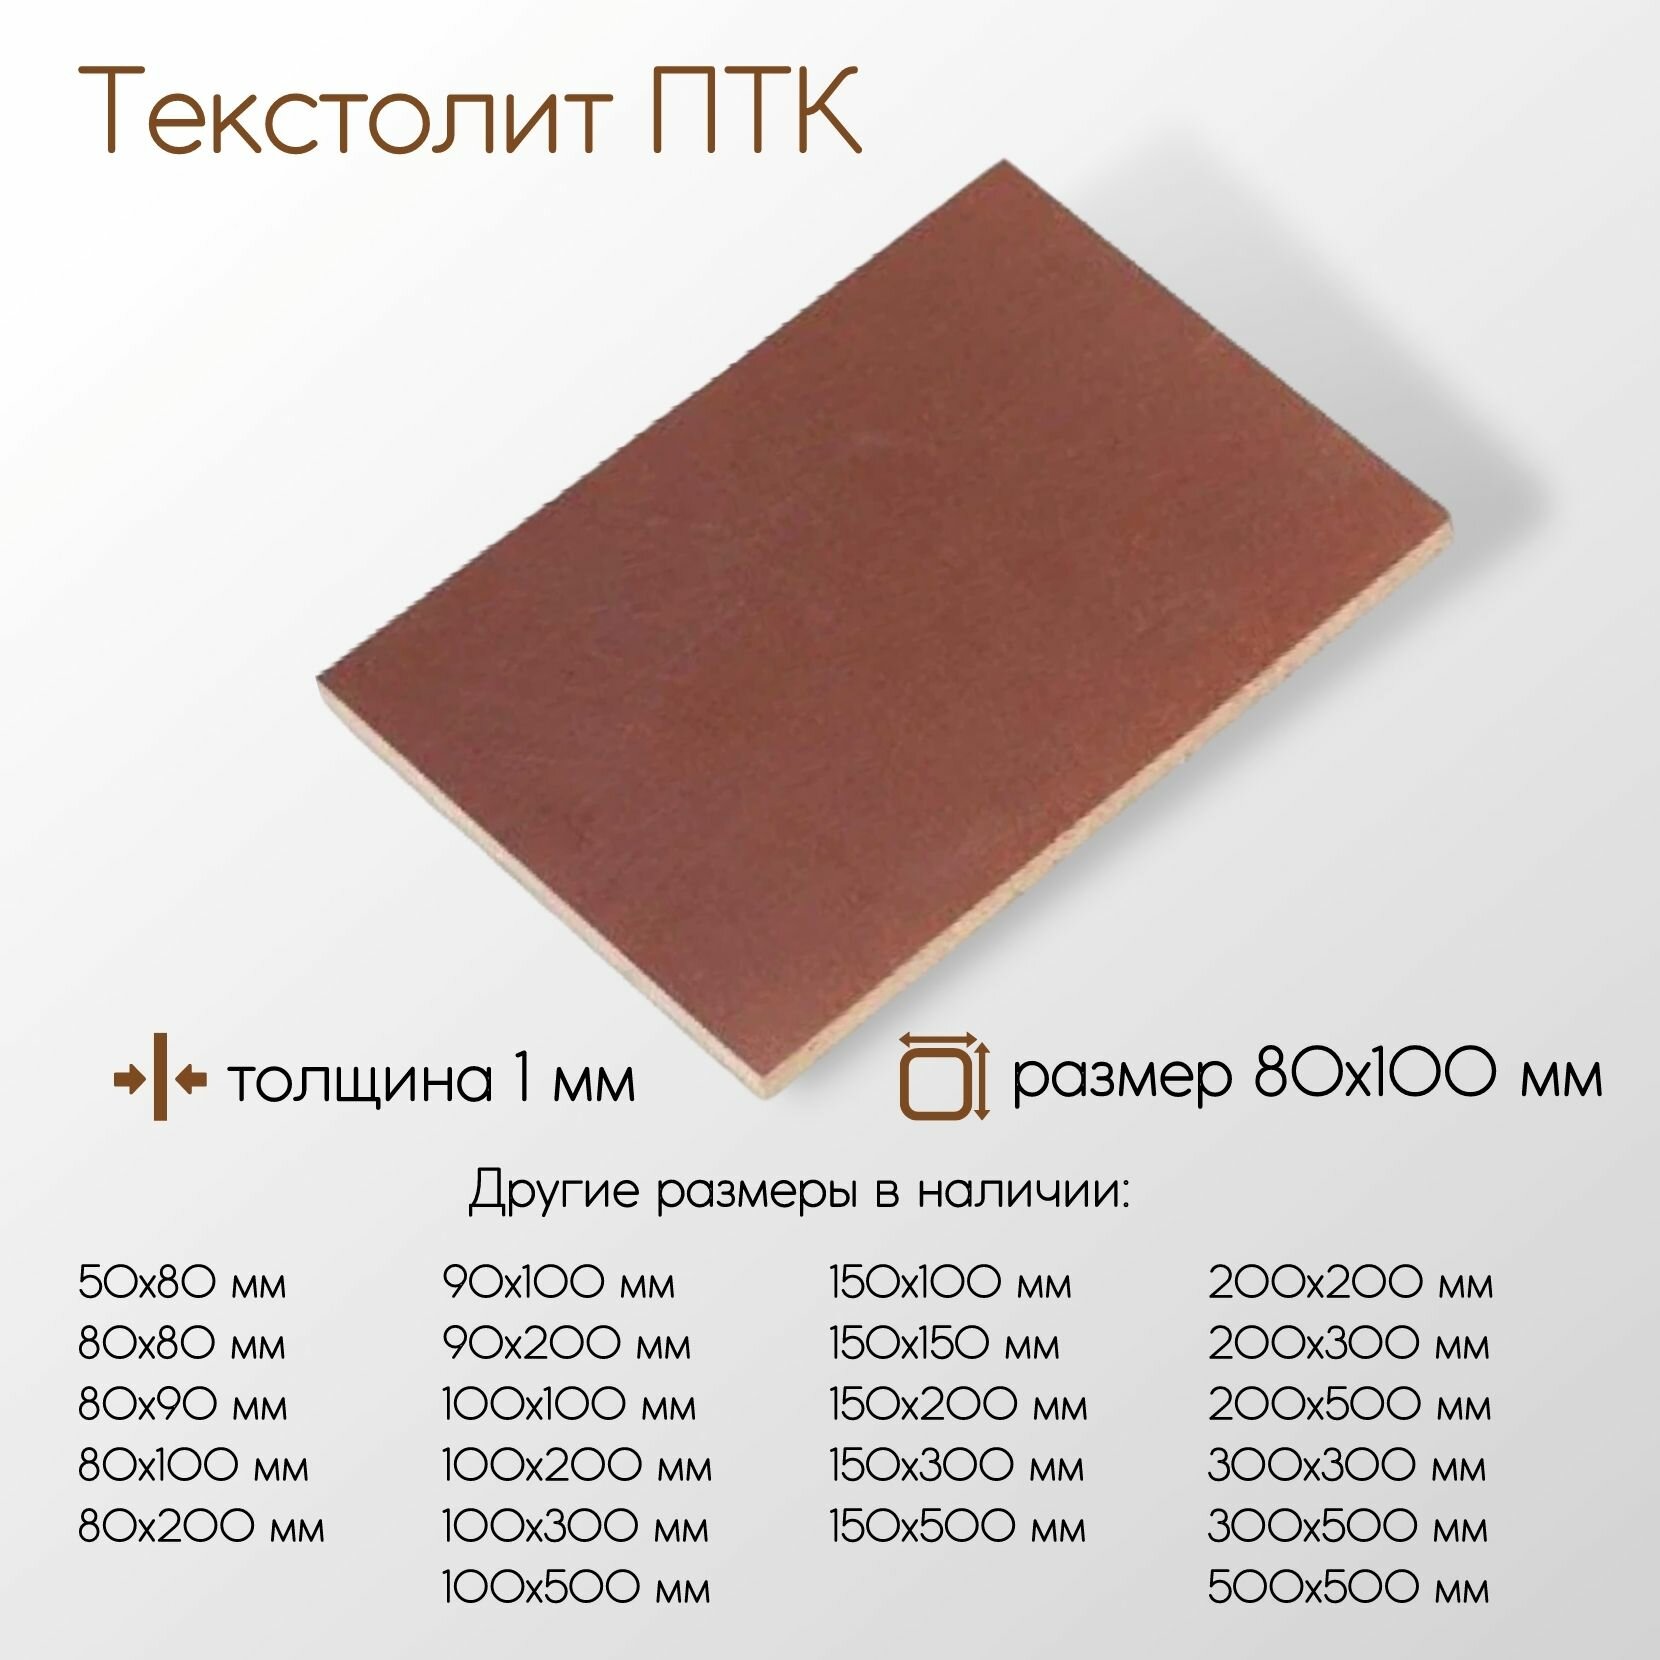 Текстолит ПТК лист толщина 1 мм 1x80x100 мм